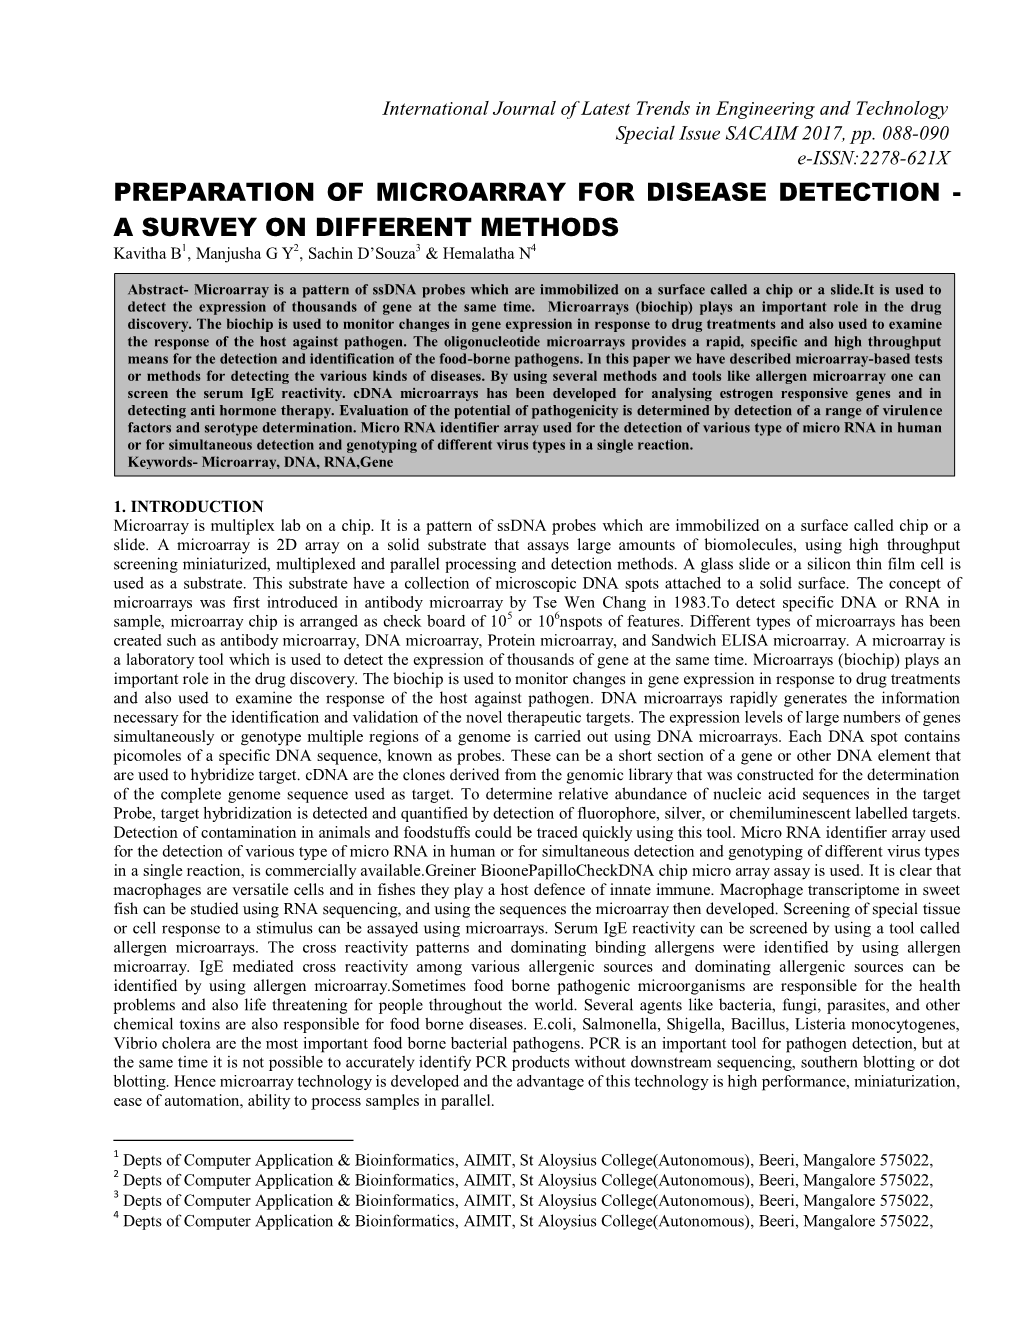 PREPARATION of MICROARRAY for DISEASE DETECTION - a SURVEY on DIFFERENT METHODS Kavitha B1, Manjusha G Y2, Sachin D’Souza3 & Hemalatha N4